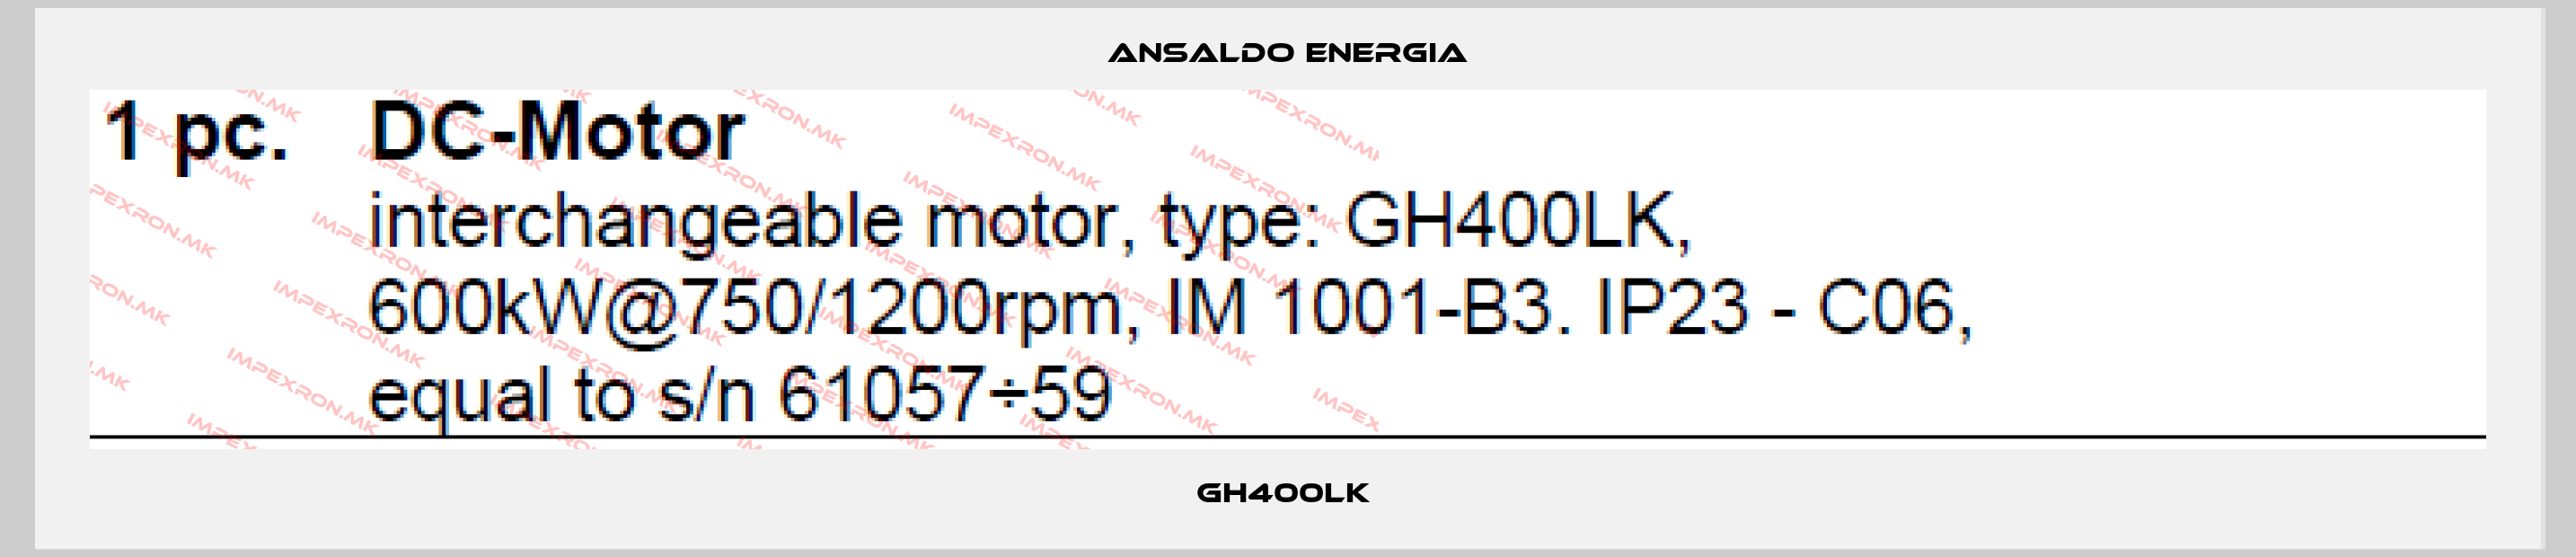 ANSALDO ENERGIA-GH400LK price